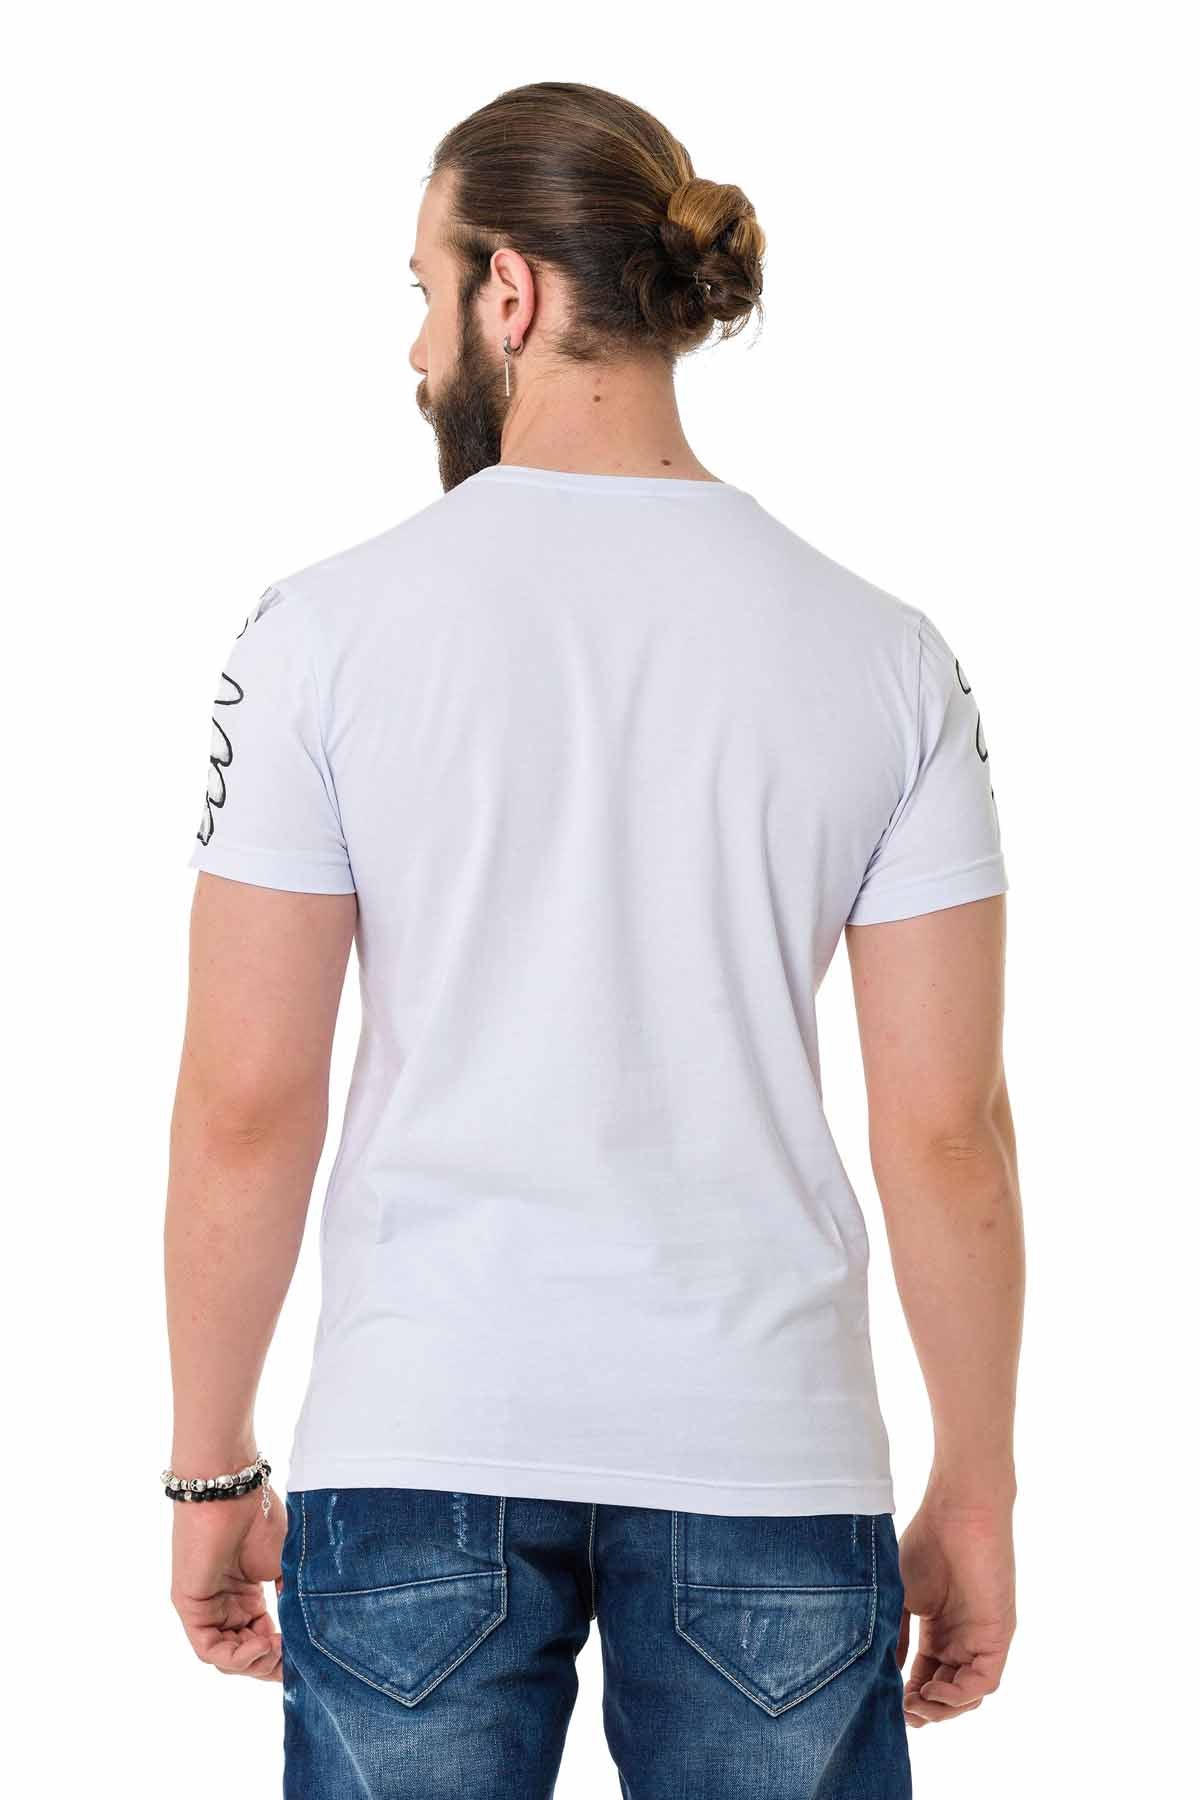 Cipo & Baxx MITCHELL Herren T-Shirt CT728